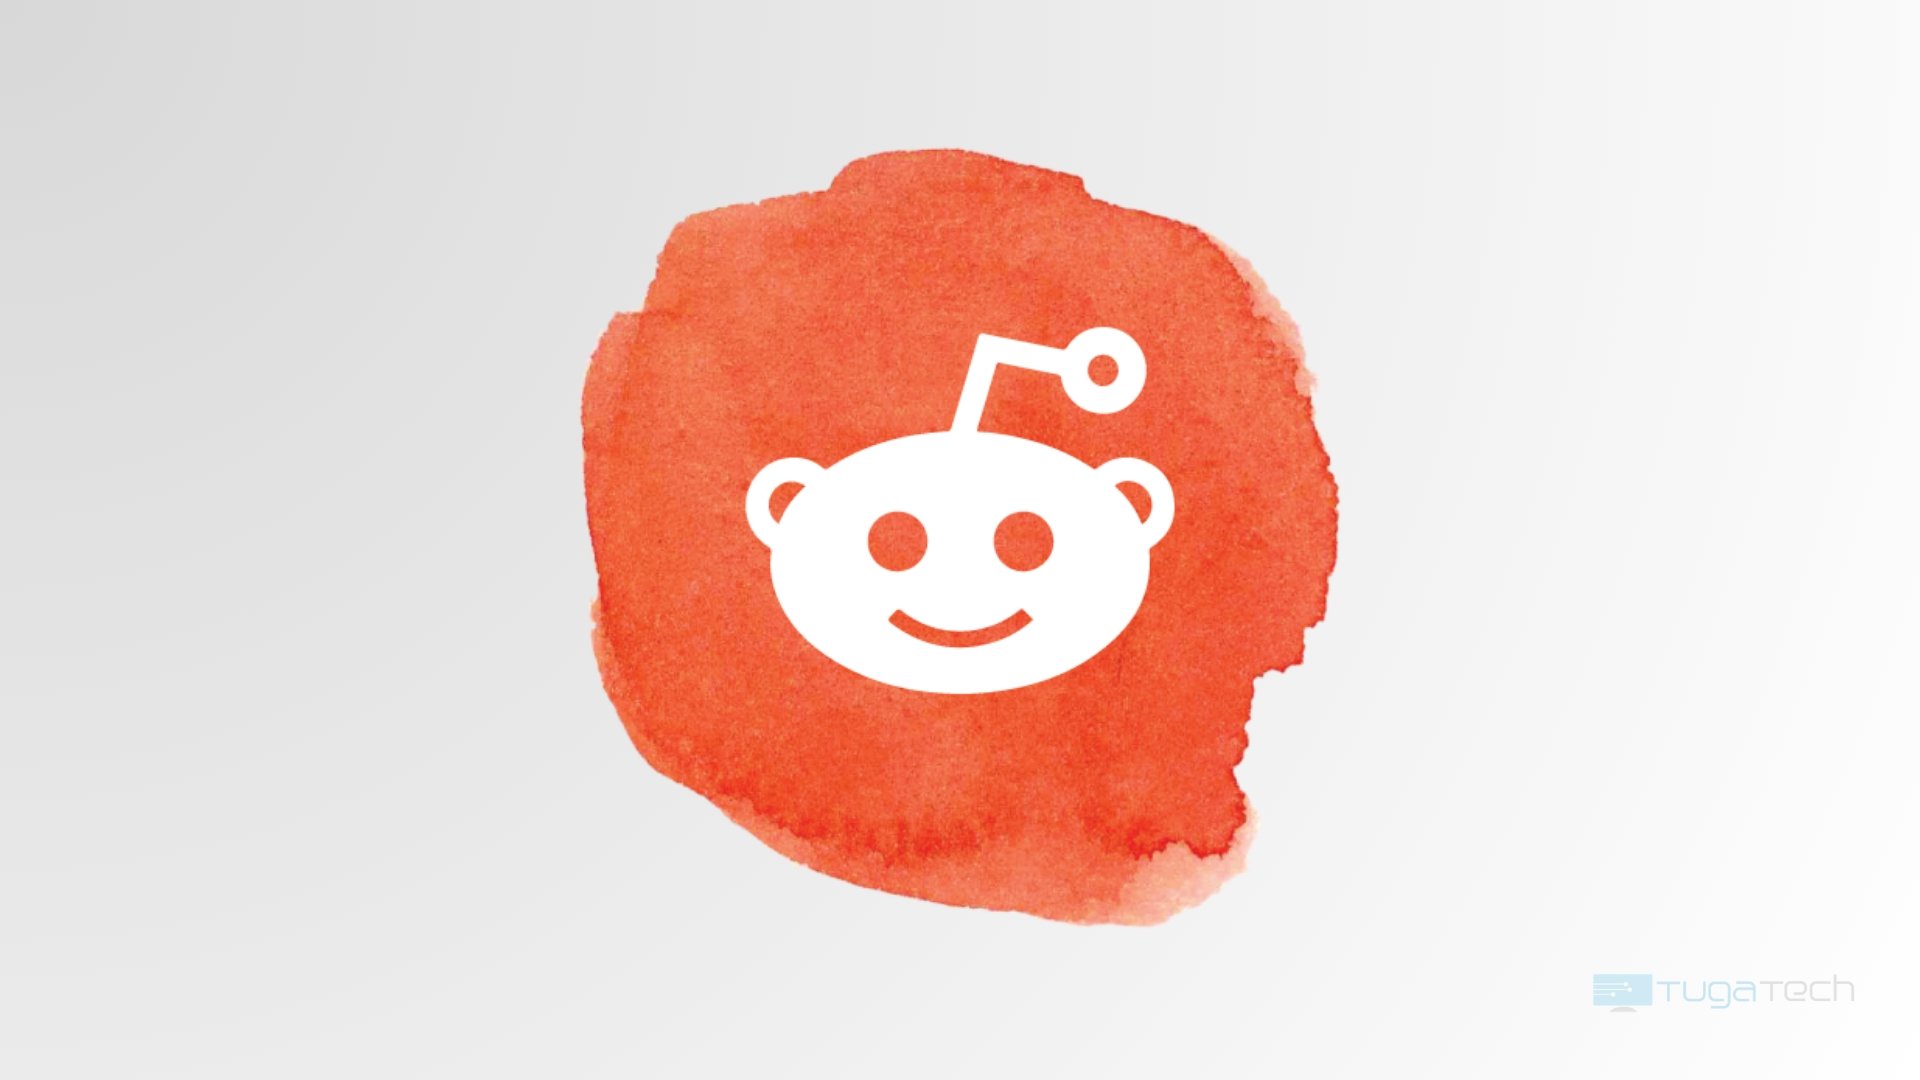 Logo do Reddit em fundo laranja